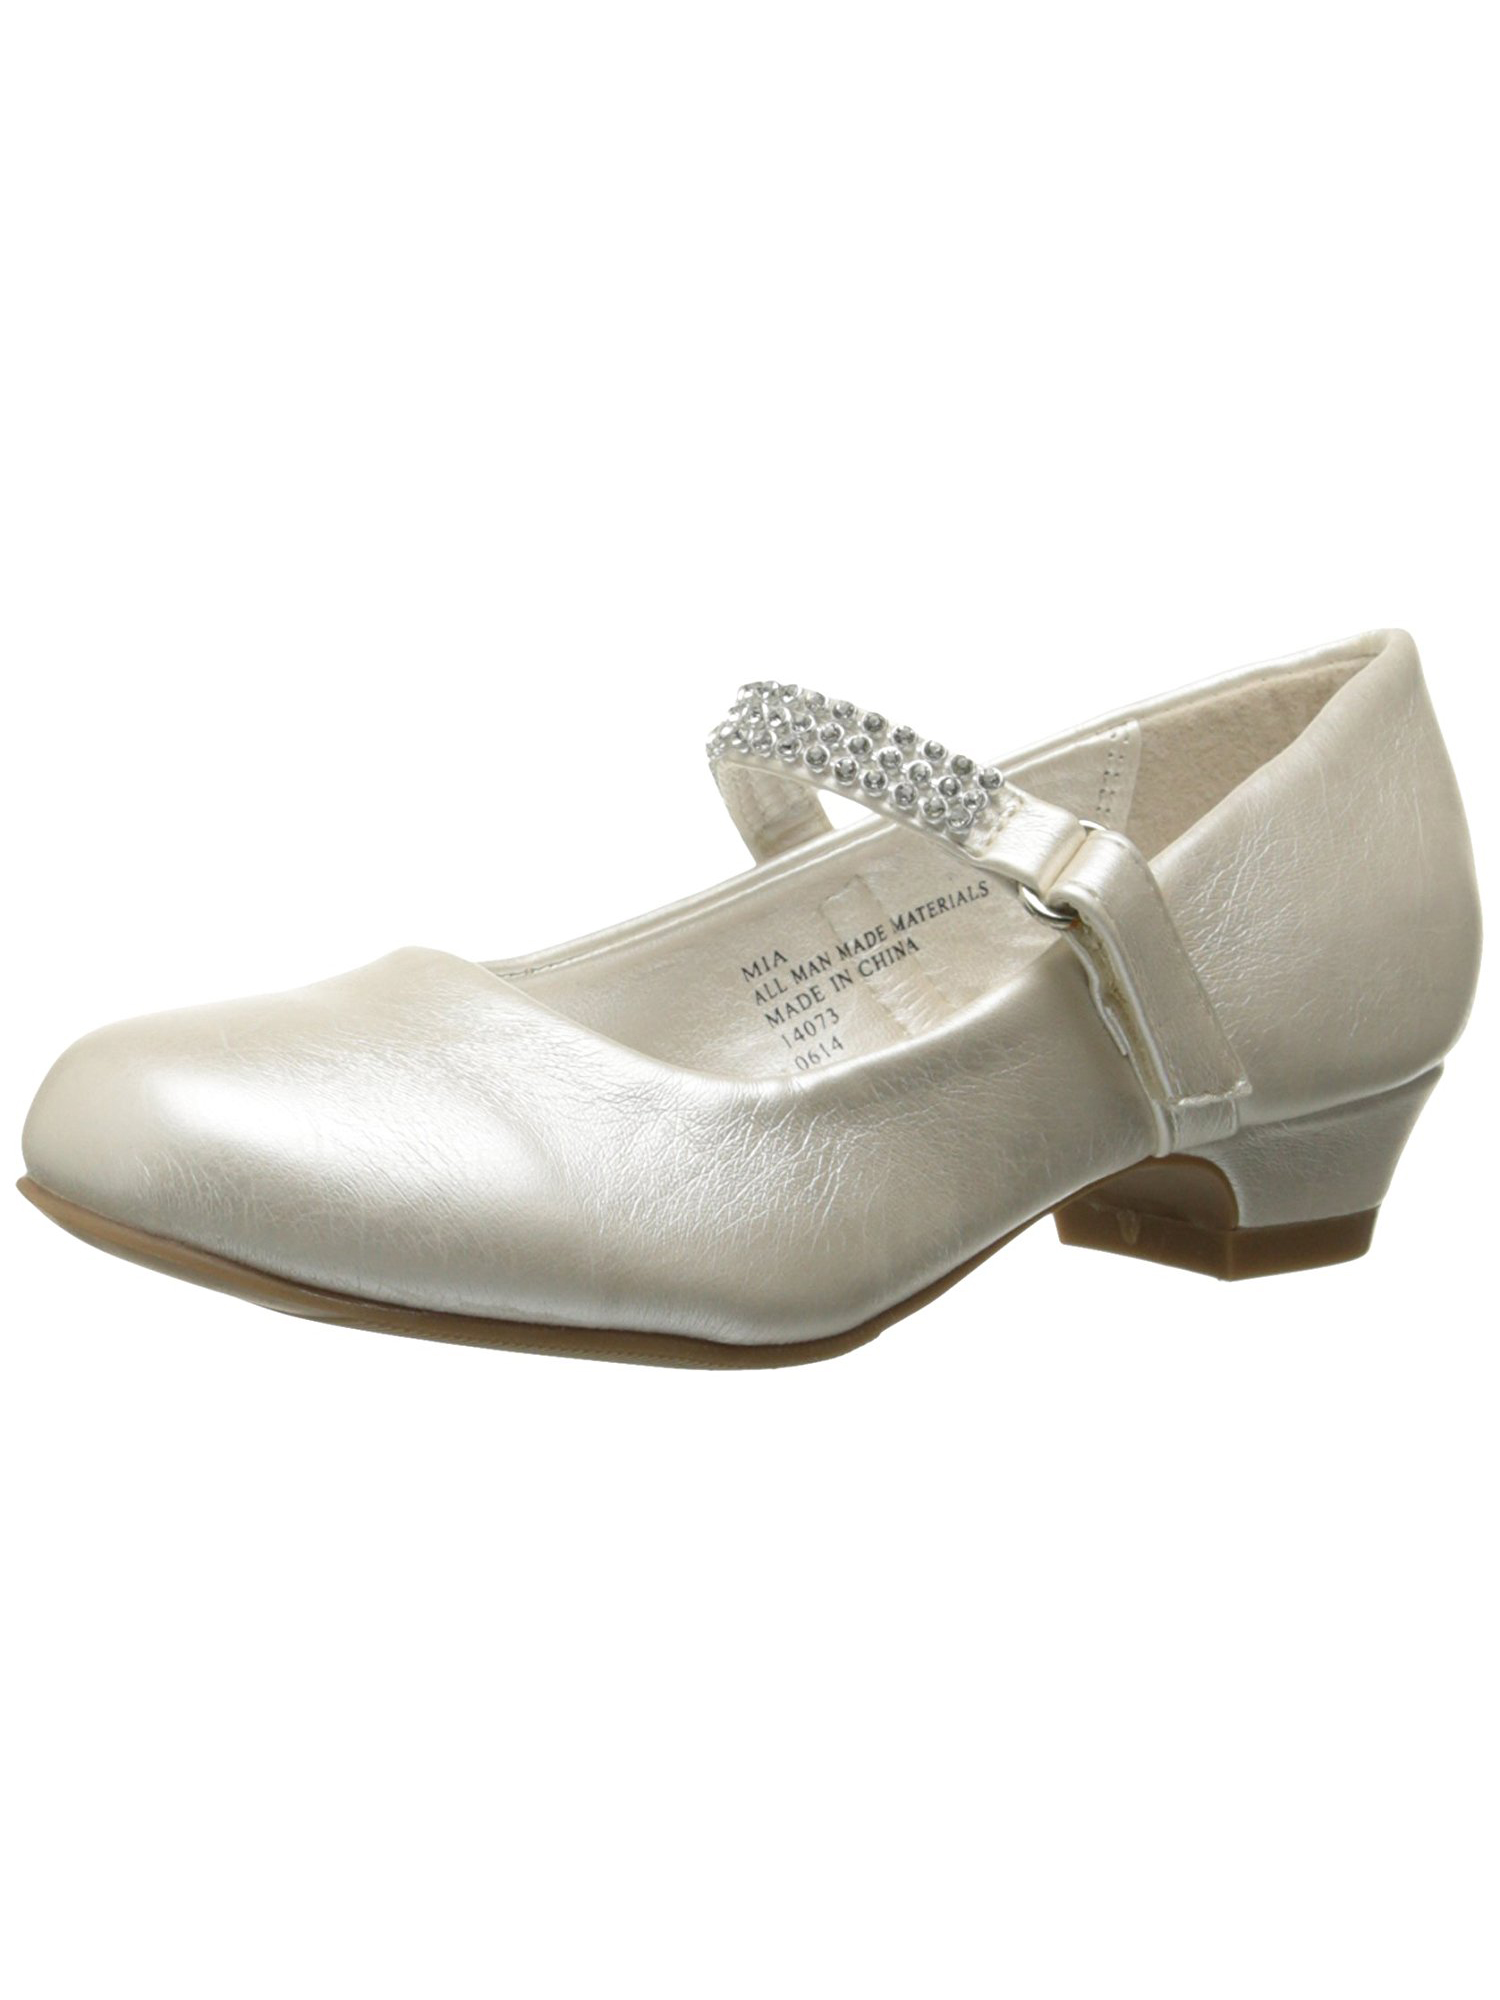 Girls Low Heel Dress Shoe With Rhinestone Strap (11, White)